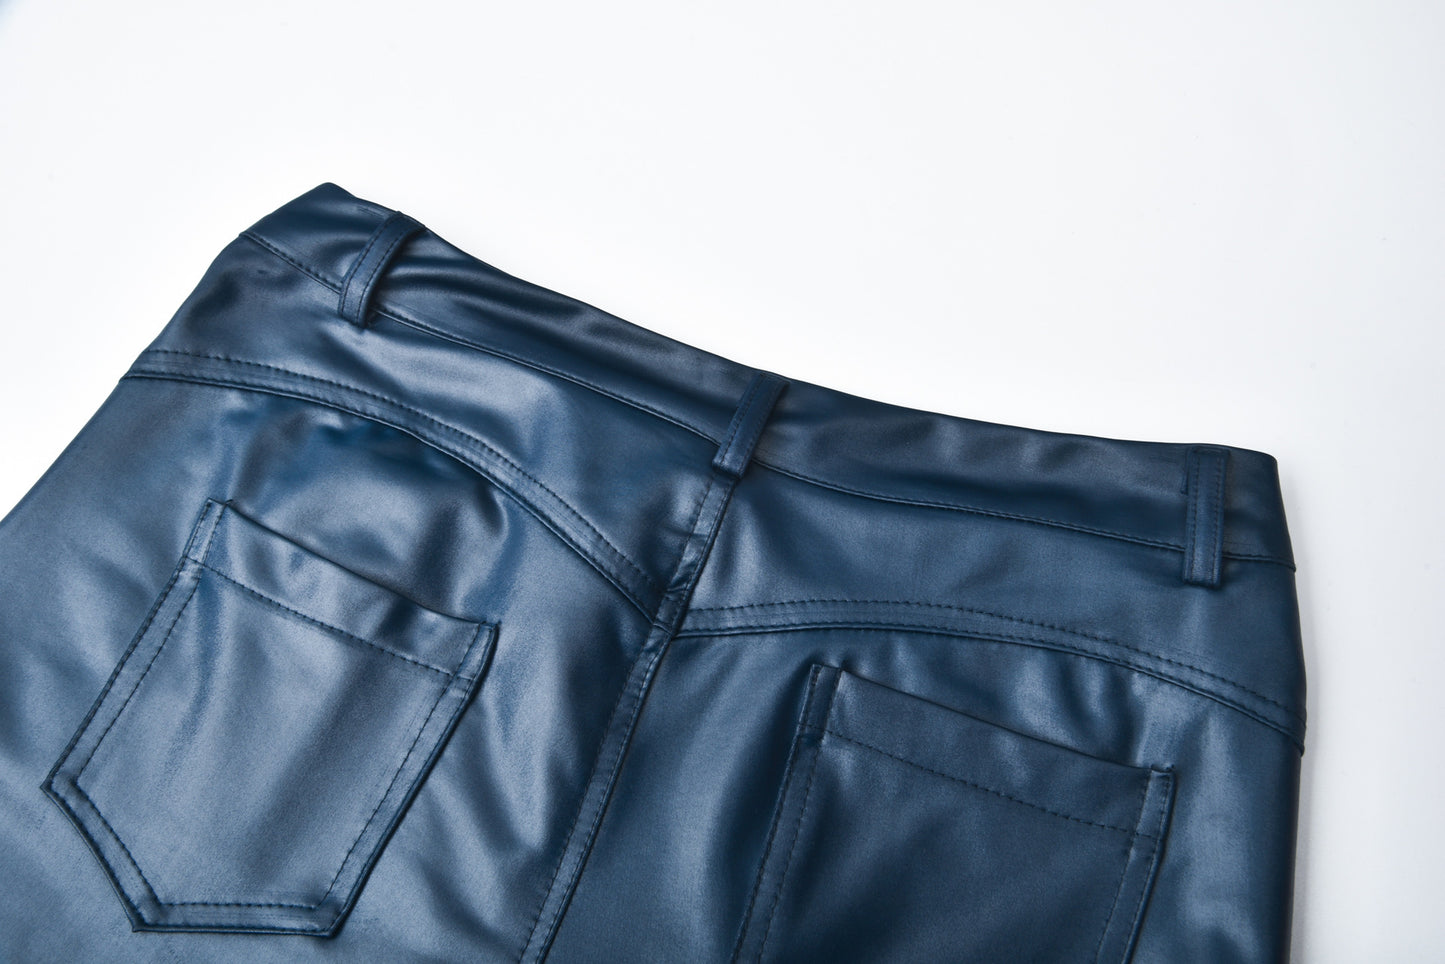 Pantalones pitillo informales de piel sintética